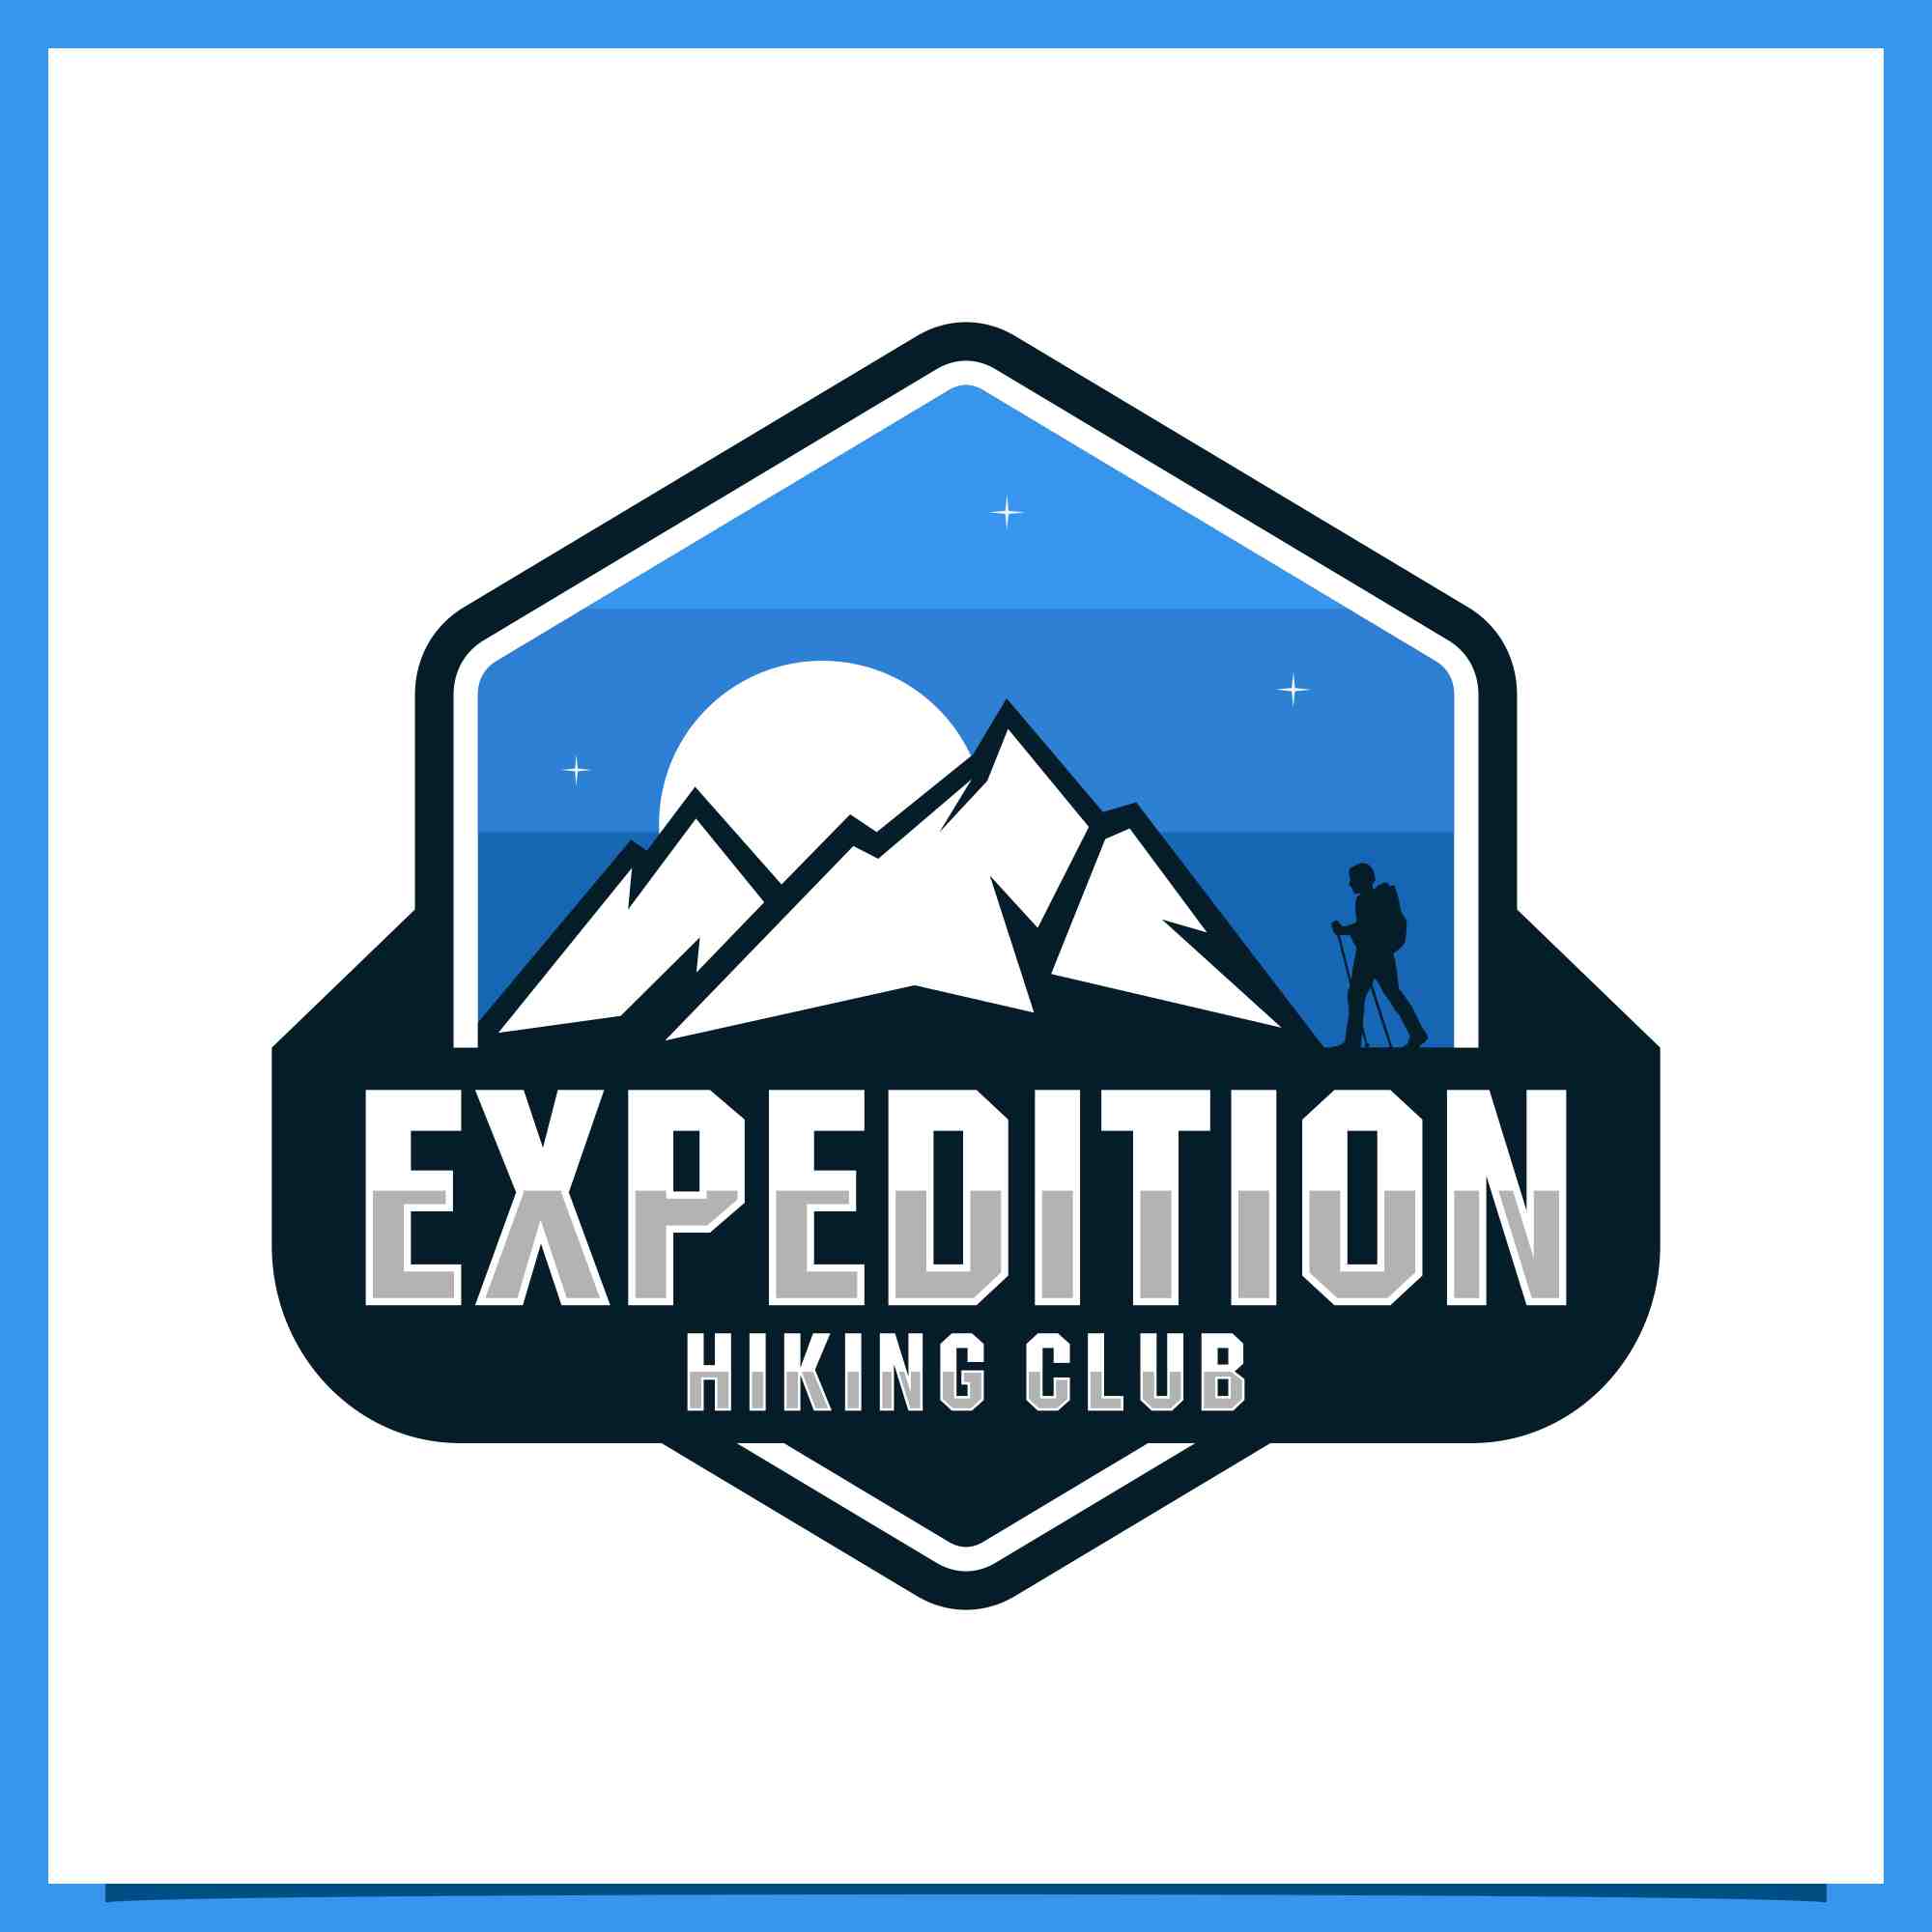 expedition outdoor adventure badge design 4 326